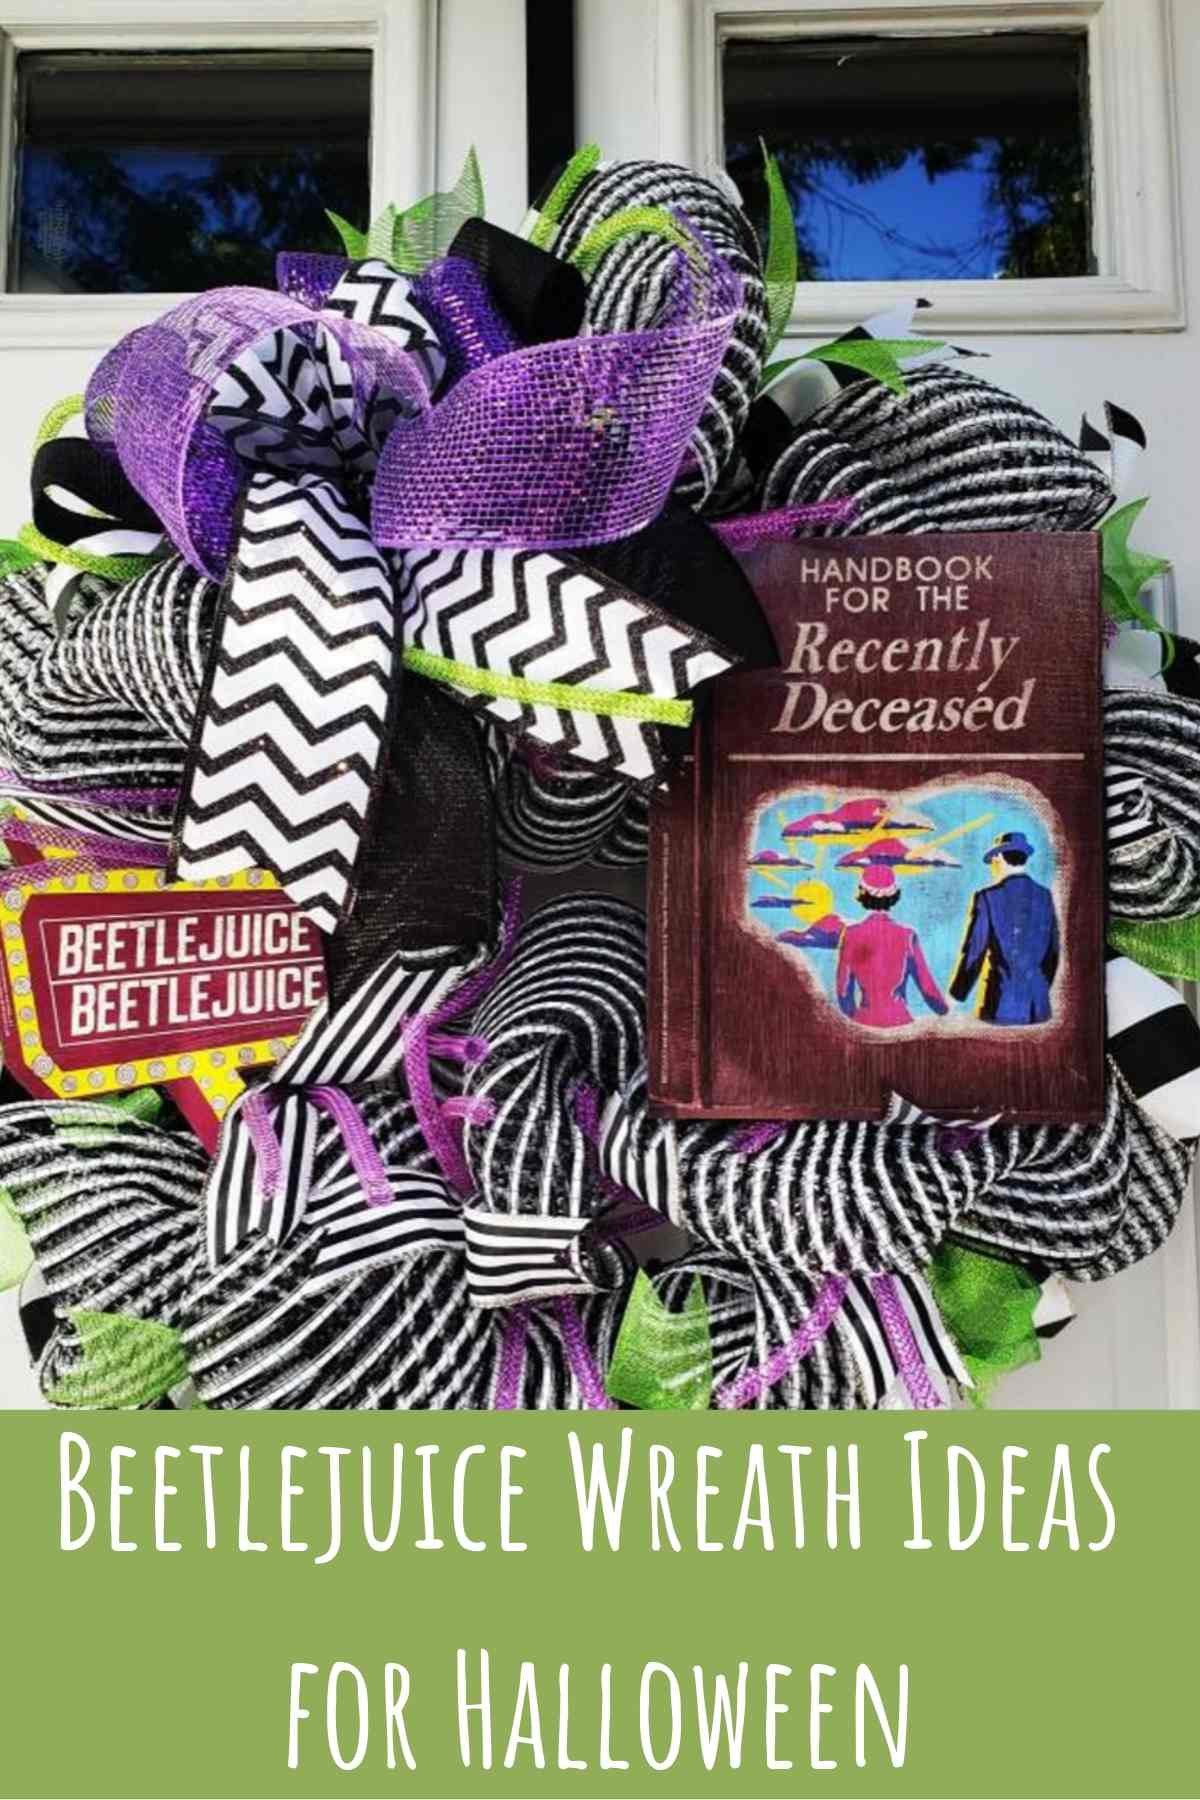 Beetlejuice Wreath Ideas for Halloween